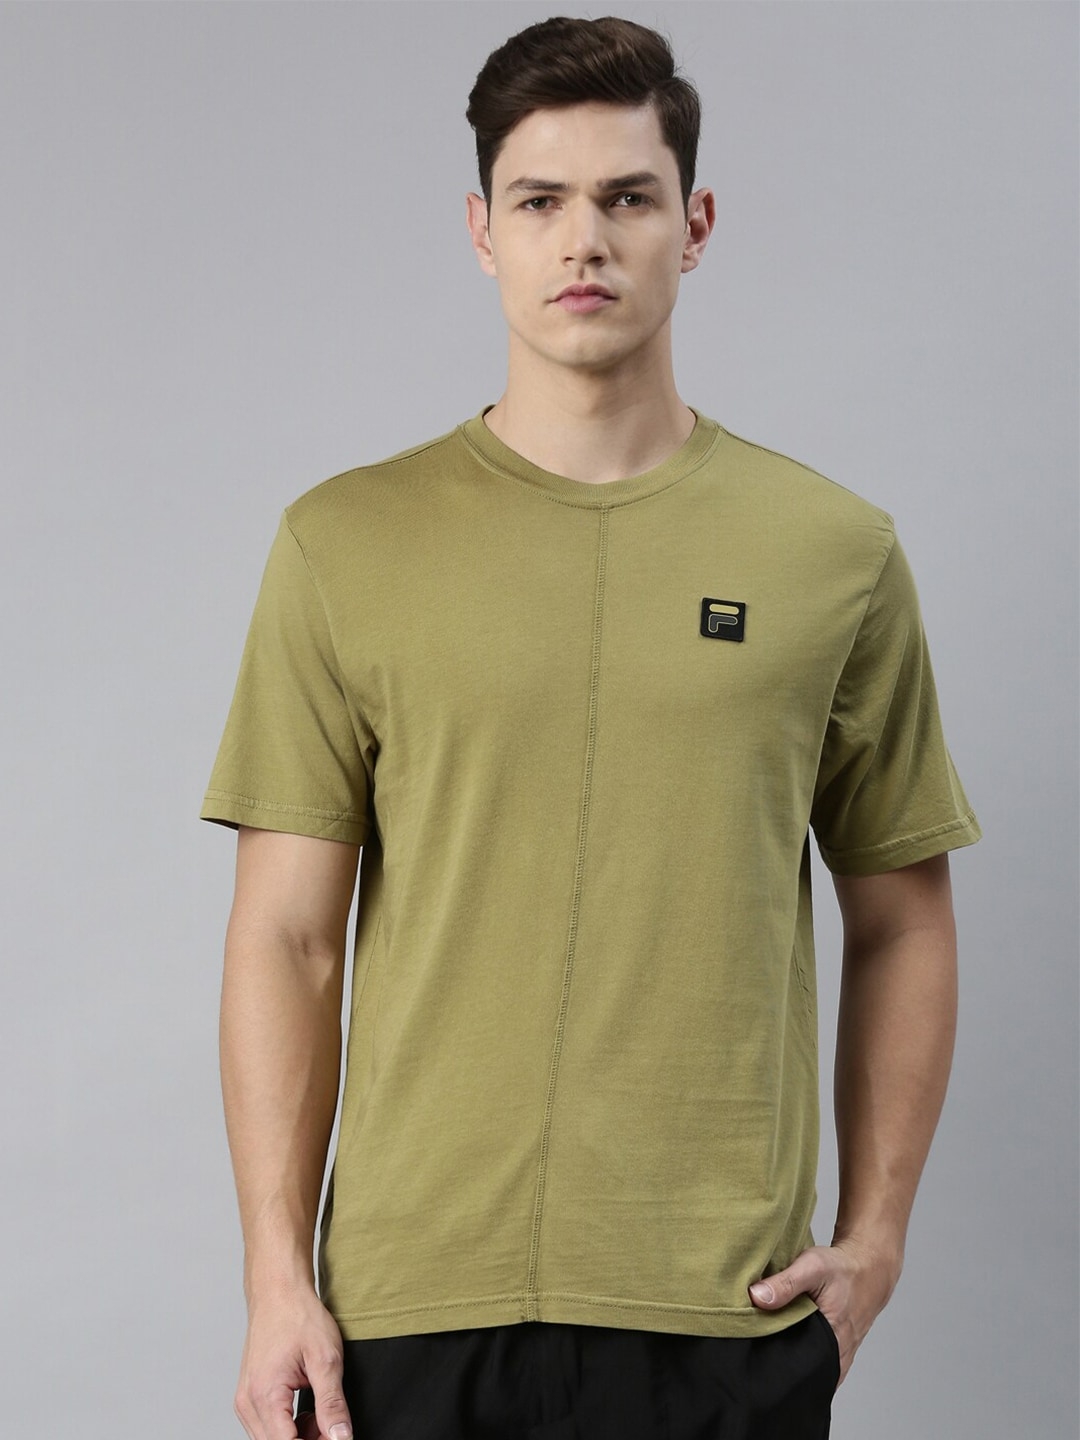 Men's Green Cotton T-Shirts